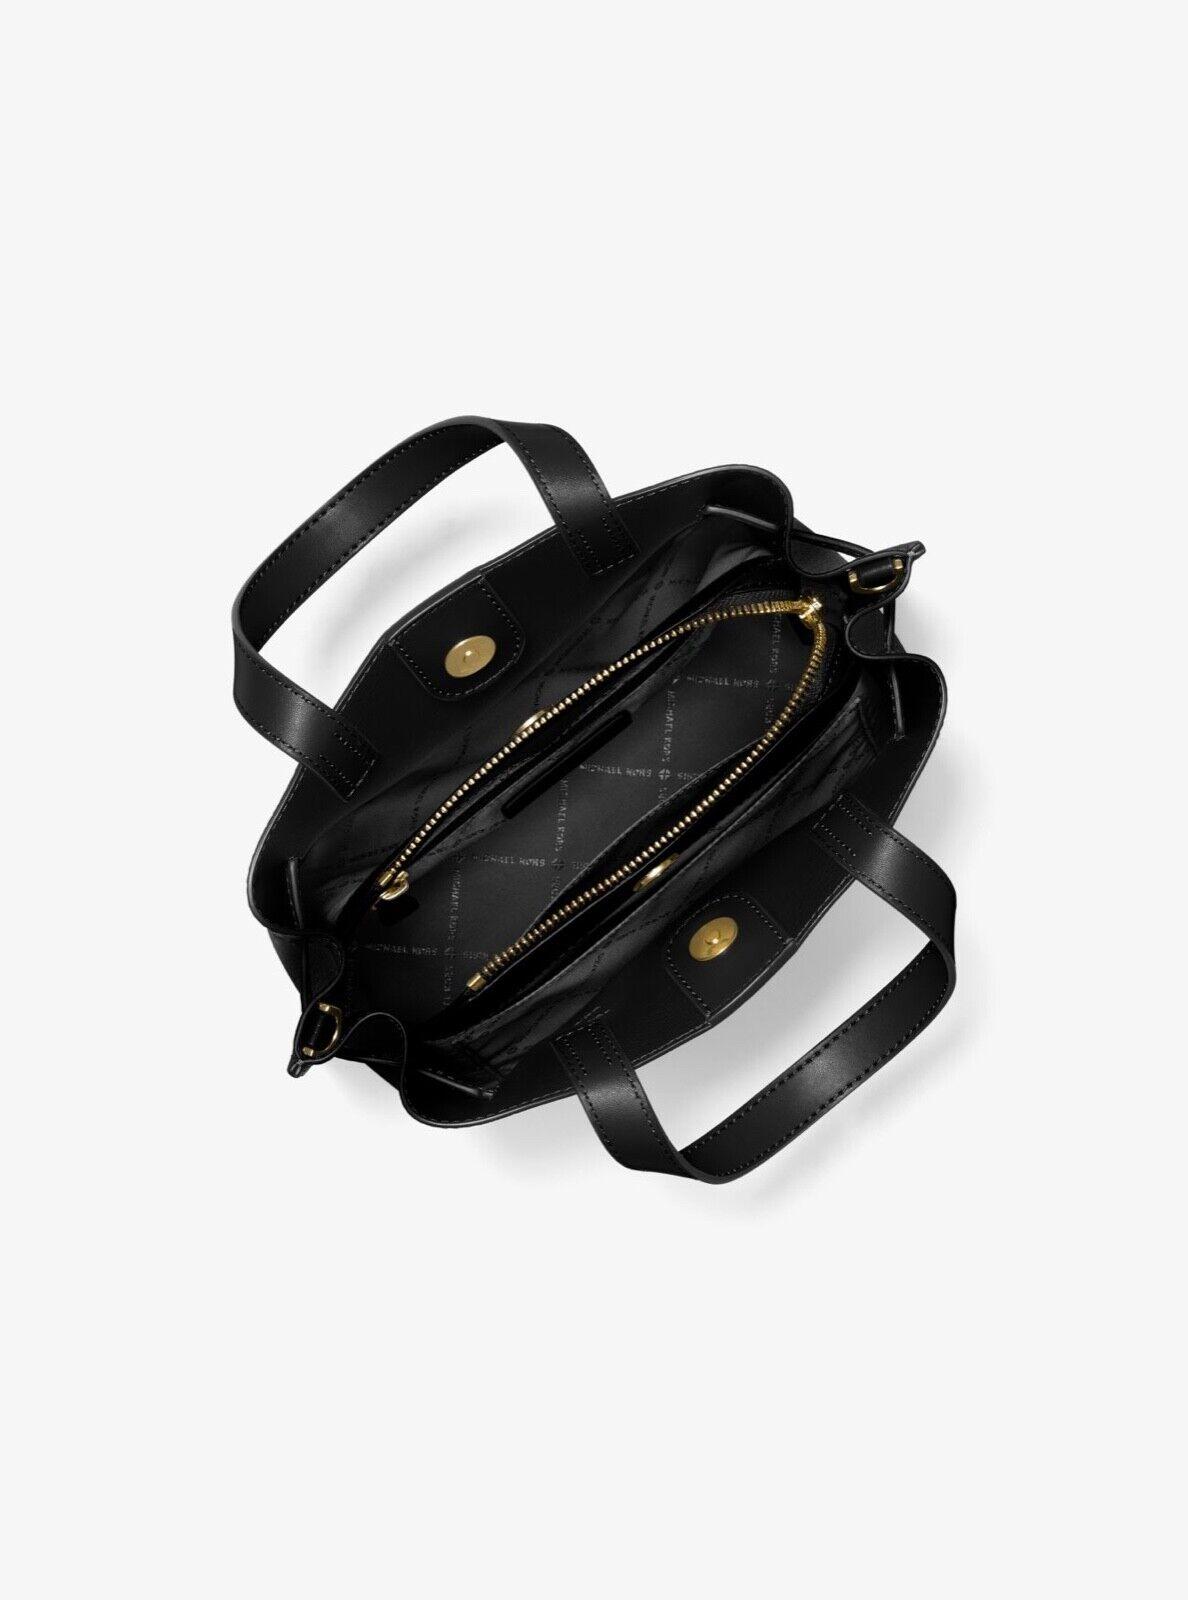 Michael Kors Emilia Small Mk Signature Leather Satchel Crossbody Bag in  Black | Lyst